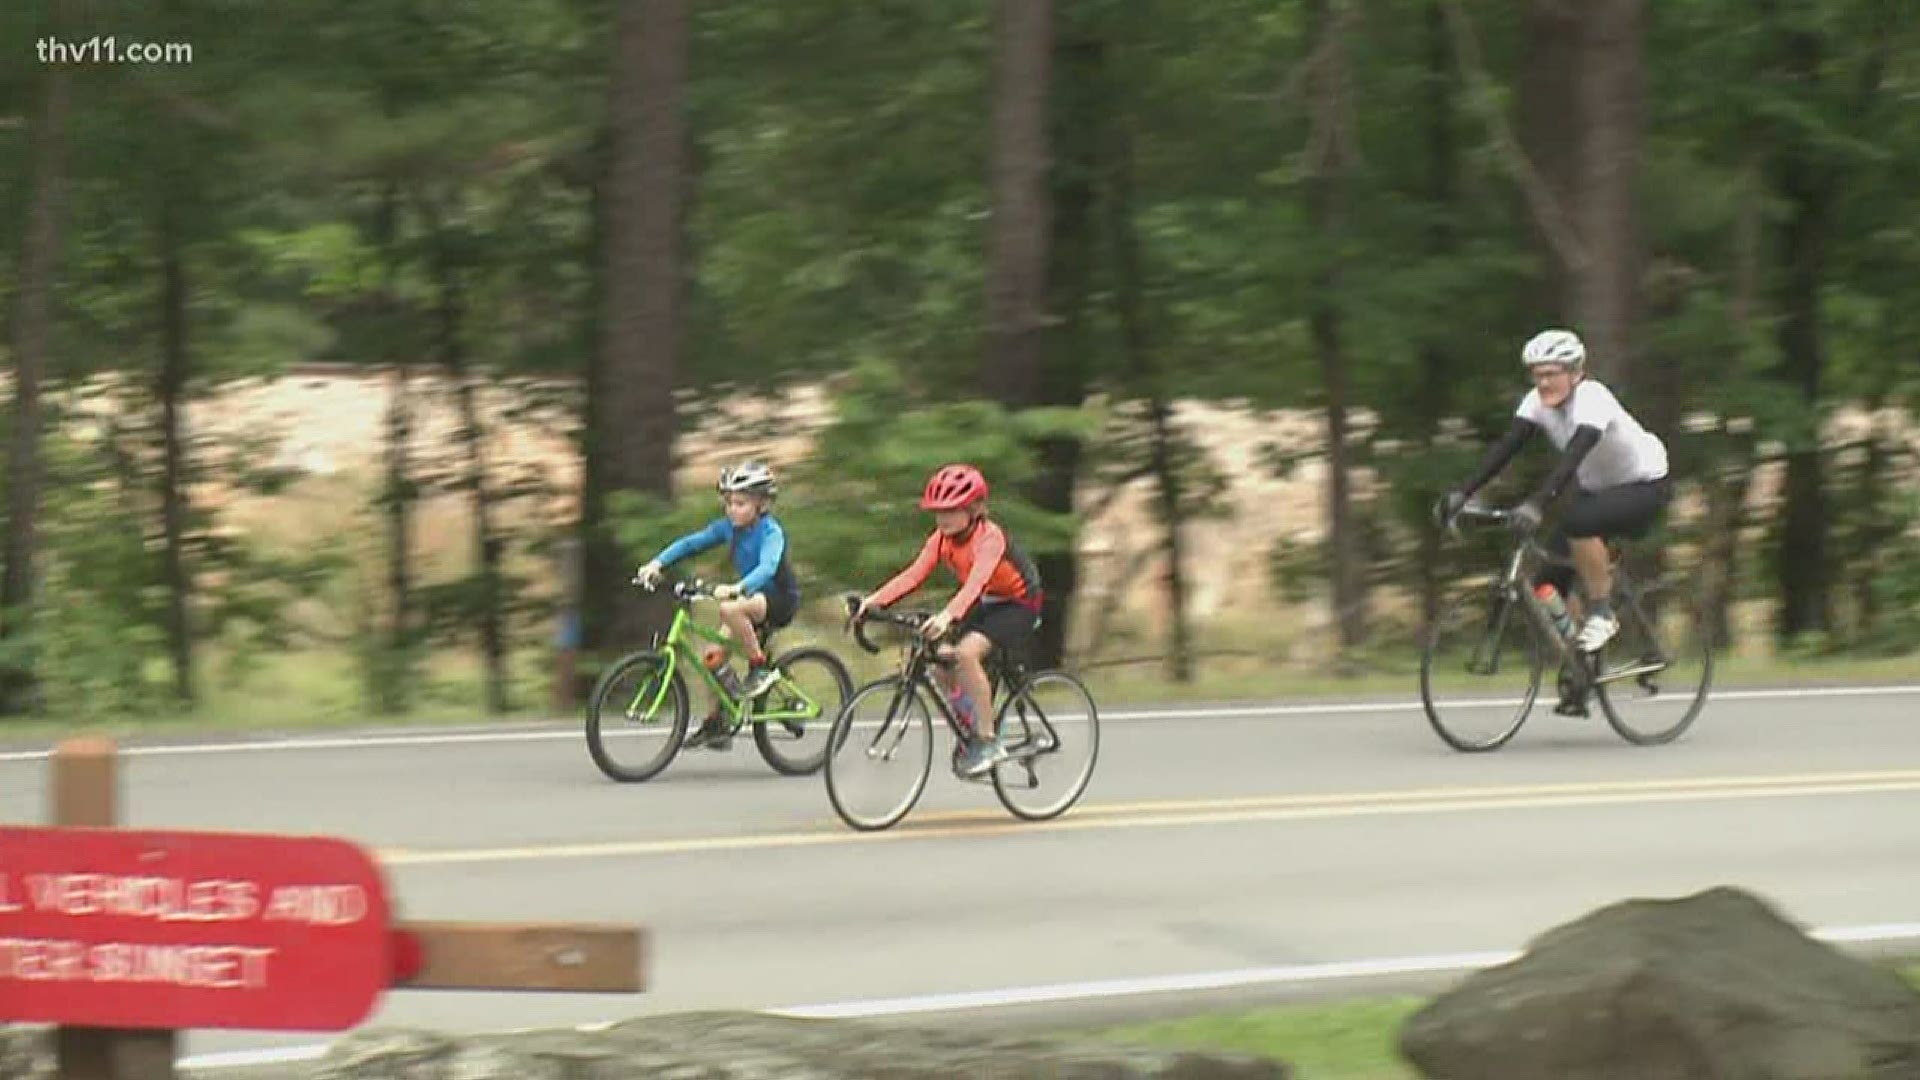 One Arkansas family went the extra mile, biking to raise money for the Arkansas Hunger Relief Alliance.